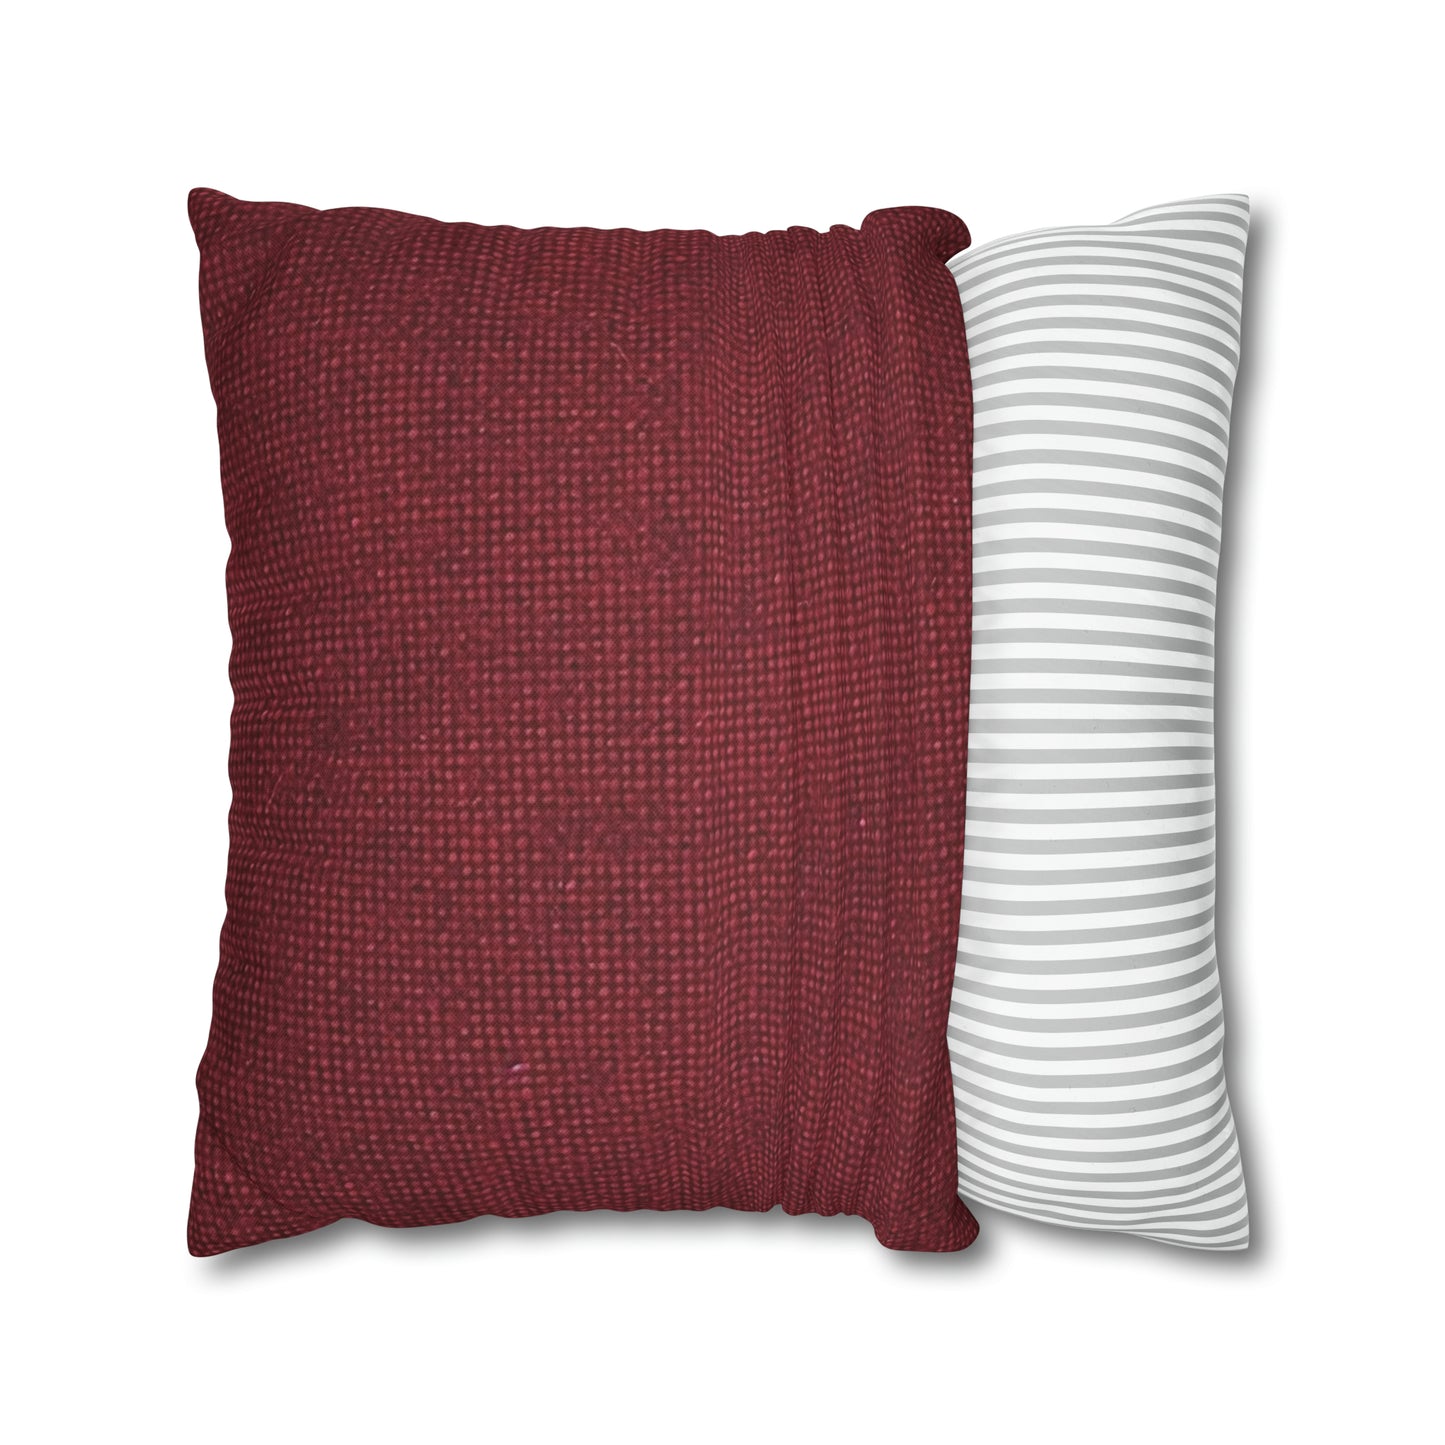 Seamless Texture - Maroon/Burgundy Denim-Inspired Fabric - Spun Polyester Square Pillow Case